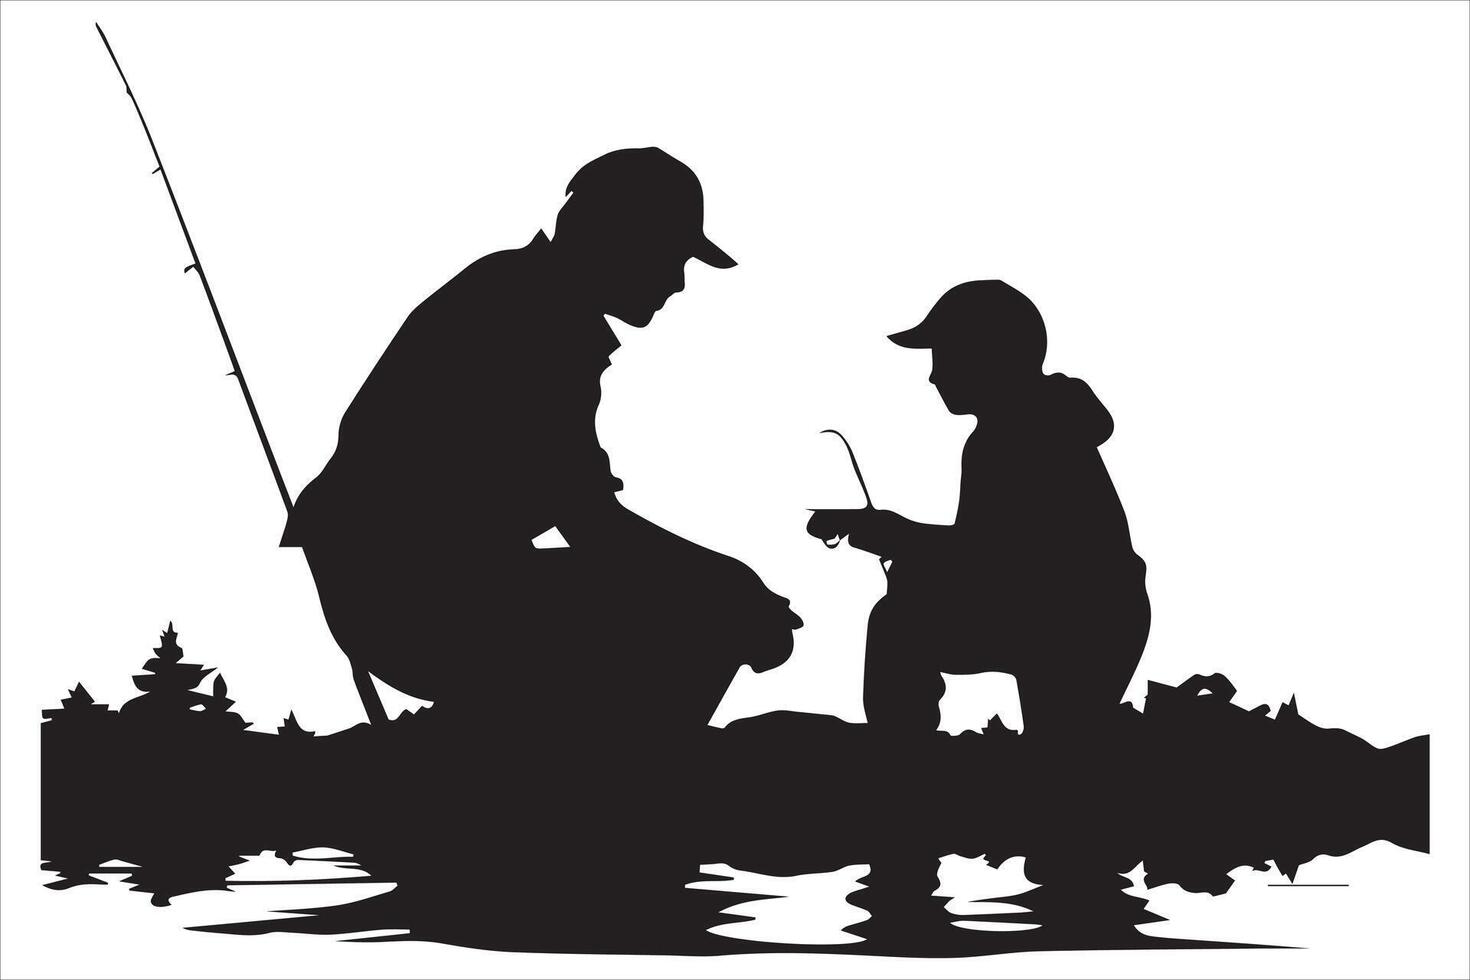 Fisherman fishing silhouette illustration vector